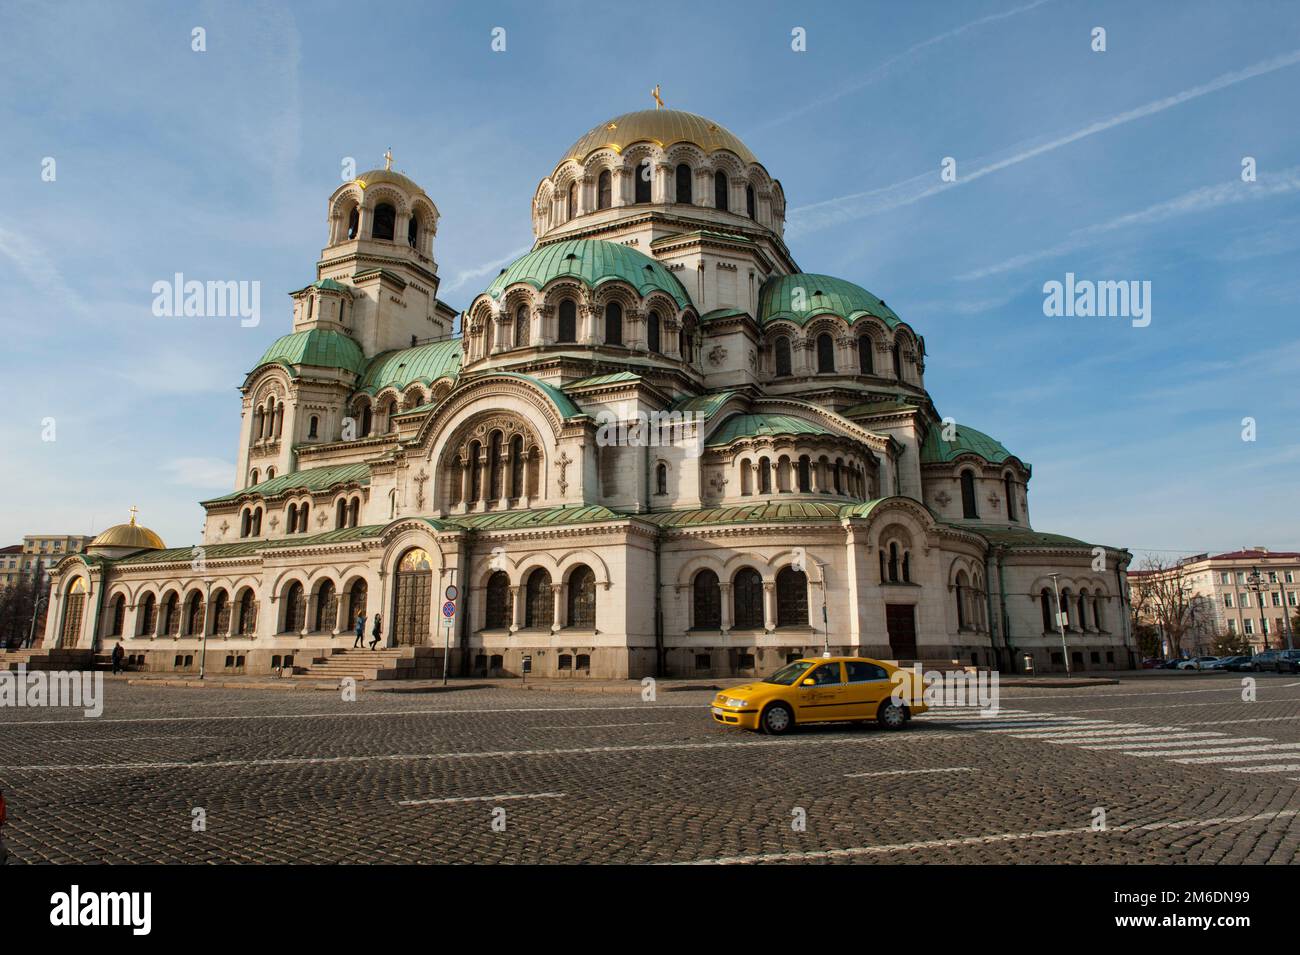 Bulgarische Taxi, die Alexander-Newski-Kathedrale in Sofia. Bulgarien Stockfoto